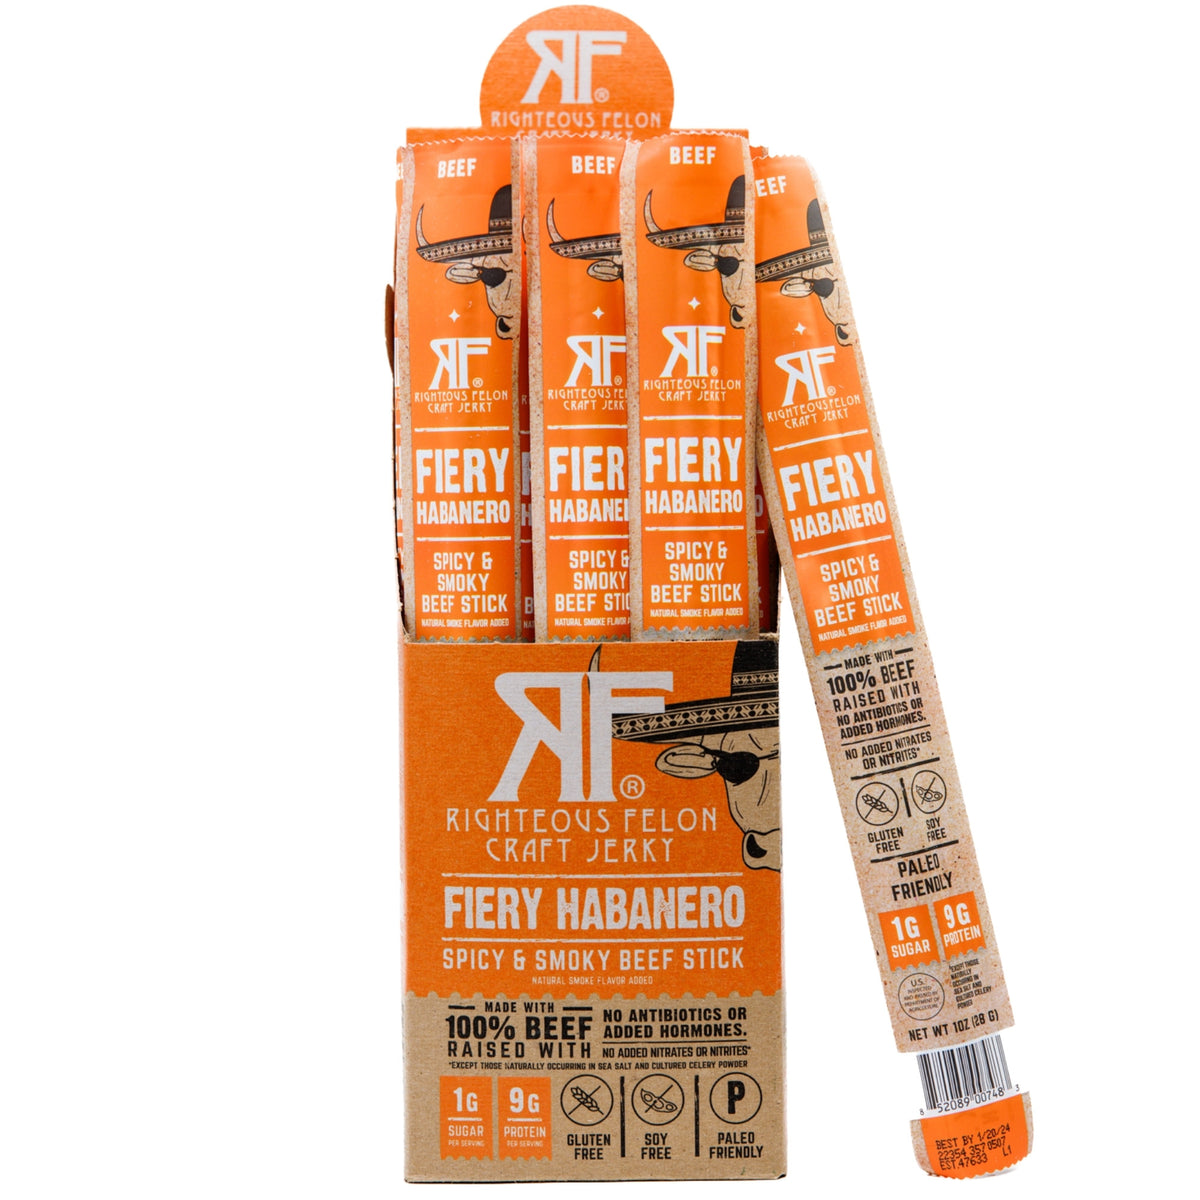 NEW Fiery Habanero Beef Stick - 24 Pack